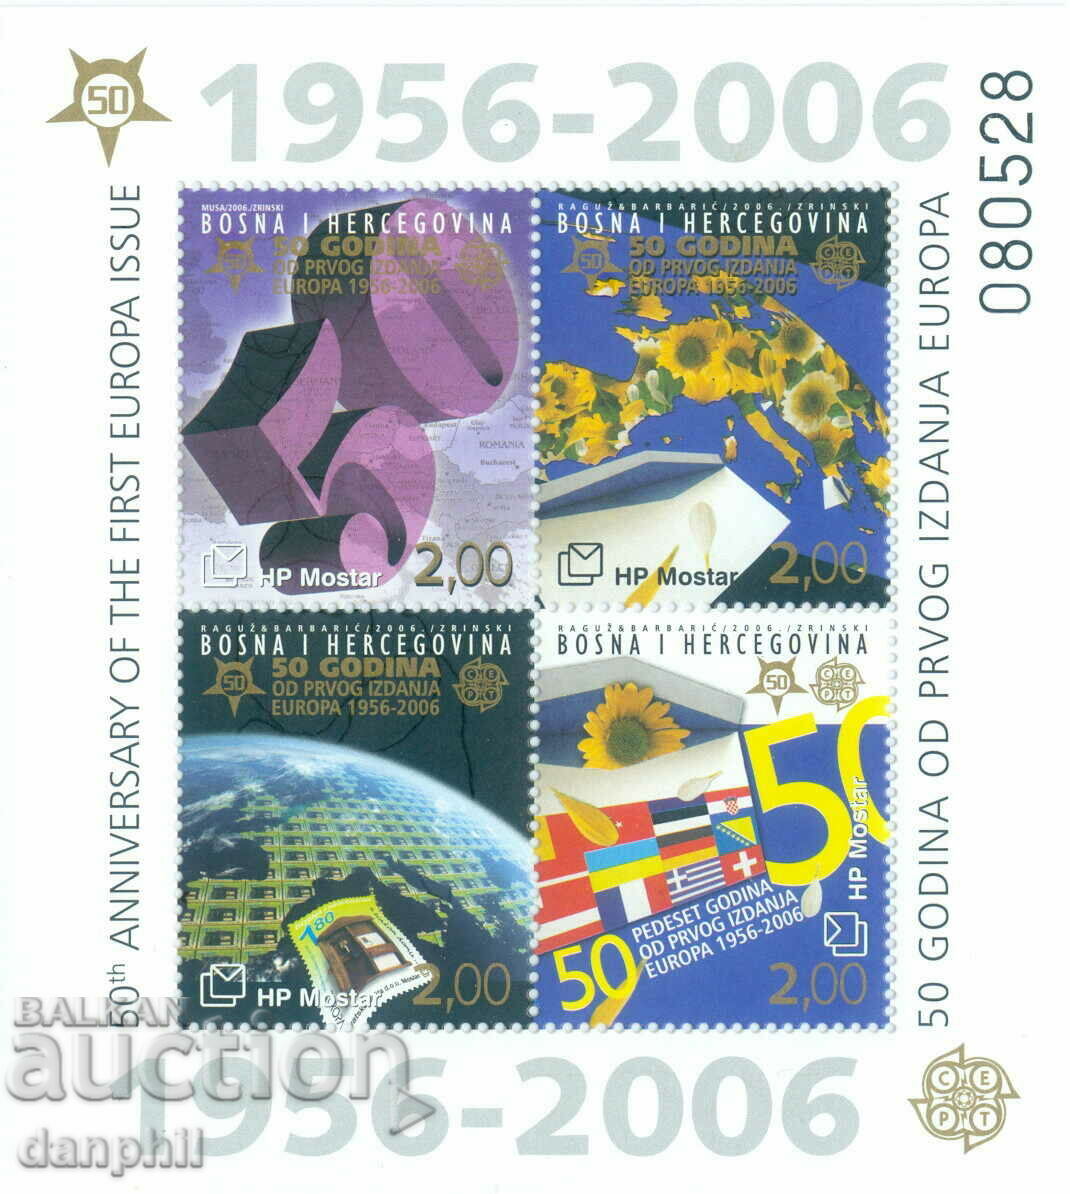 Bosnia and Herzegovina /Mostar/ 2006 - European stamps block, clean